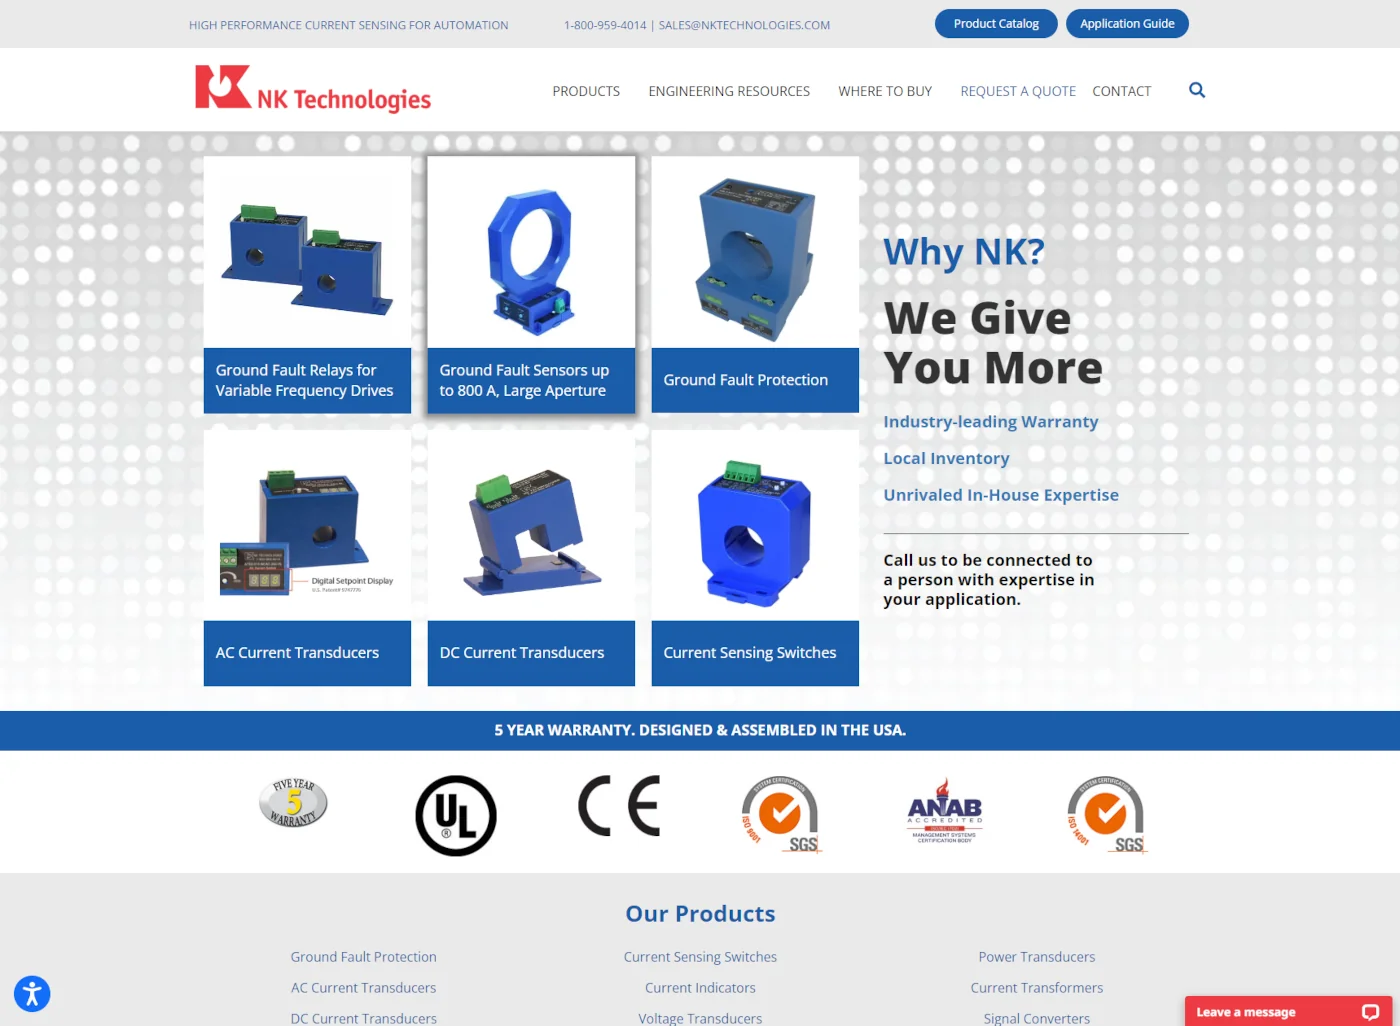 nk-technologies-homepage_1400x1026